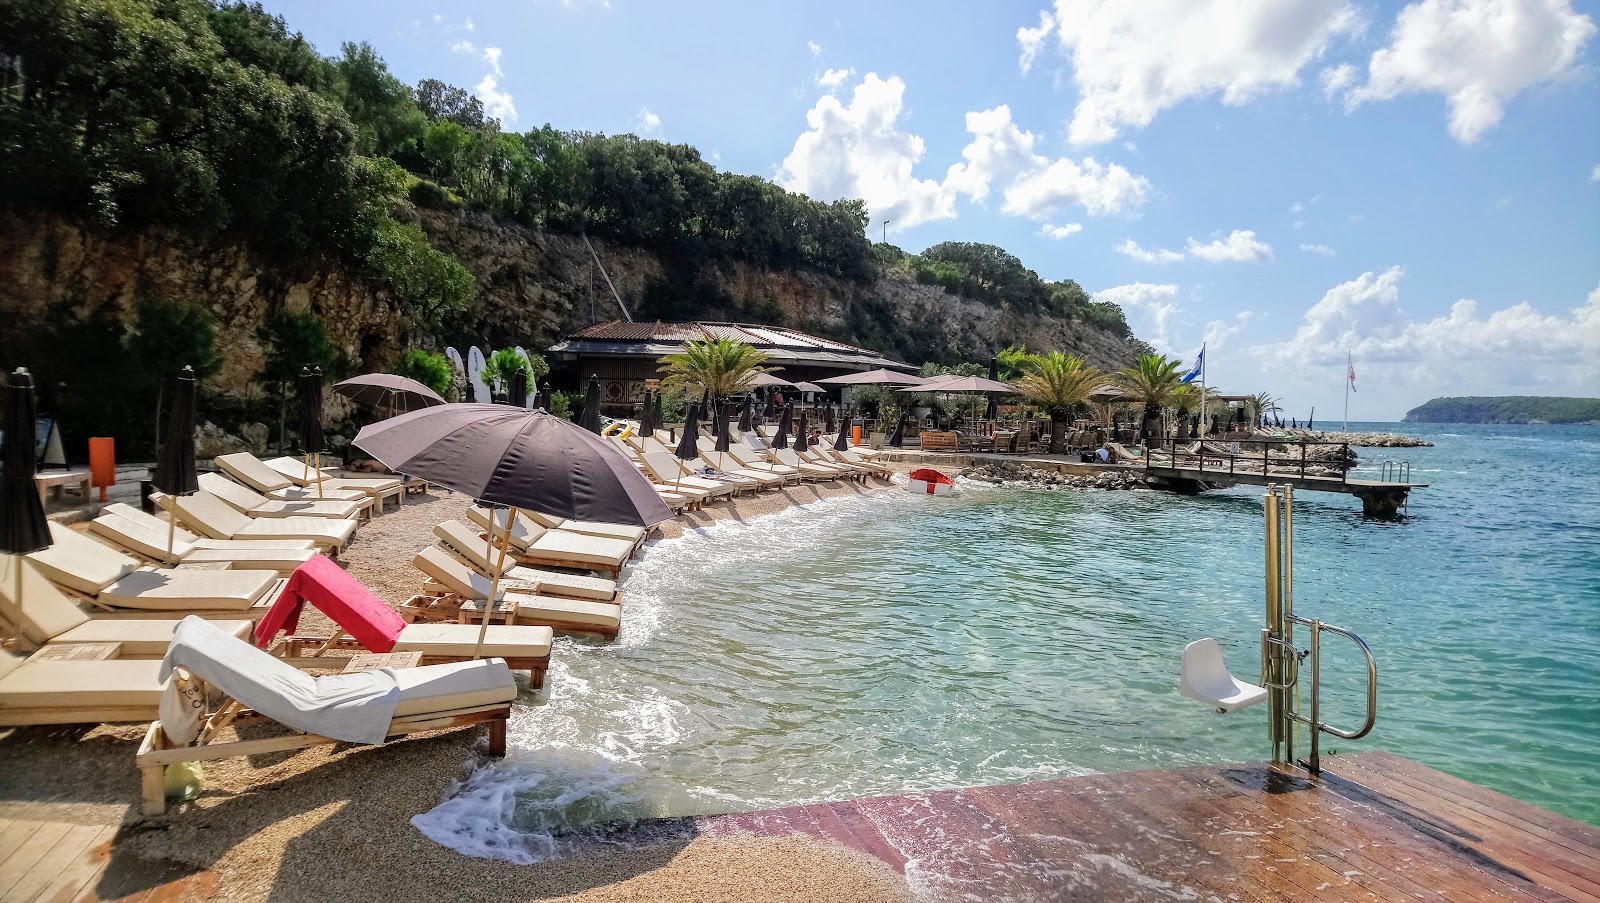 Photo of Cava beach beach resort area